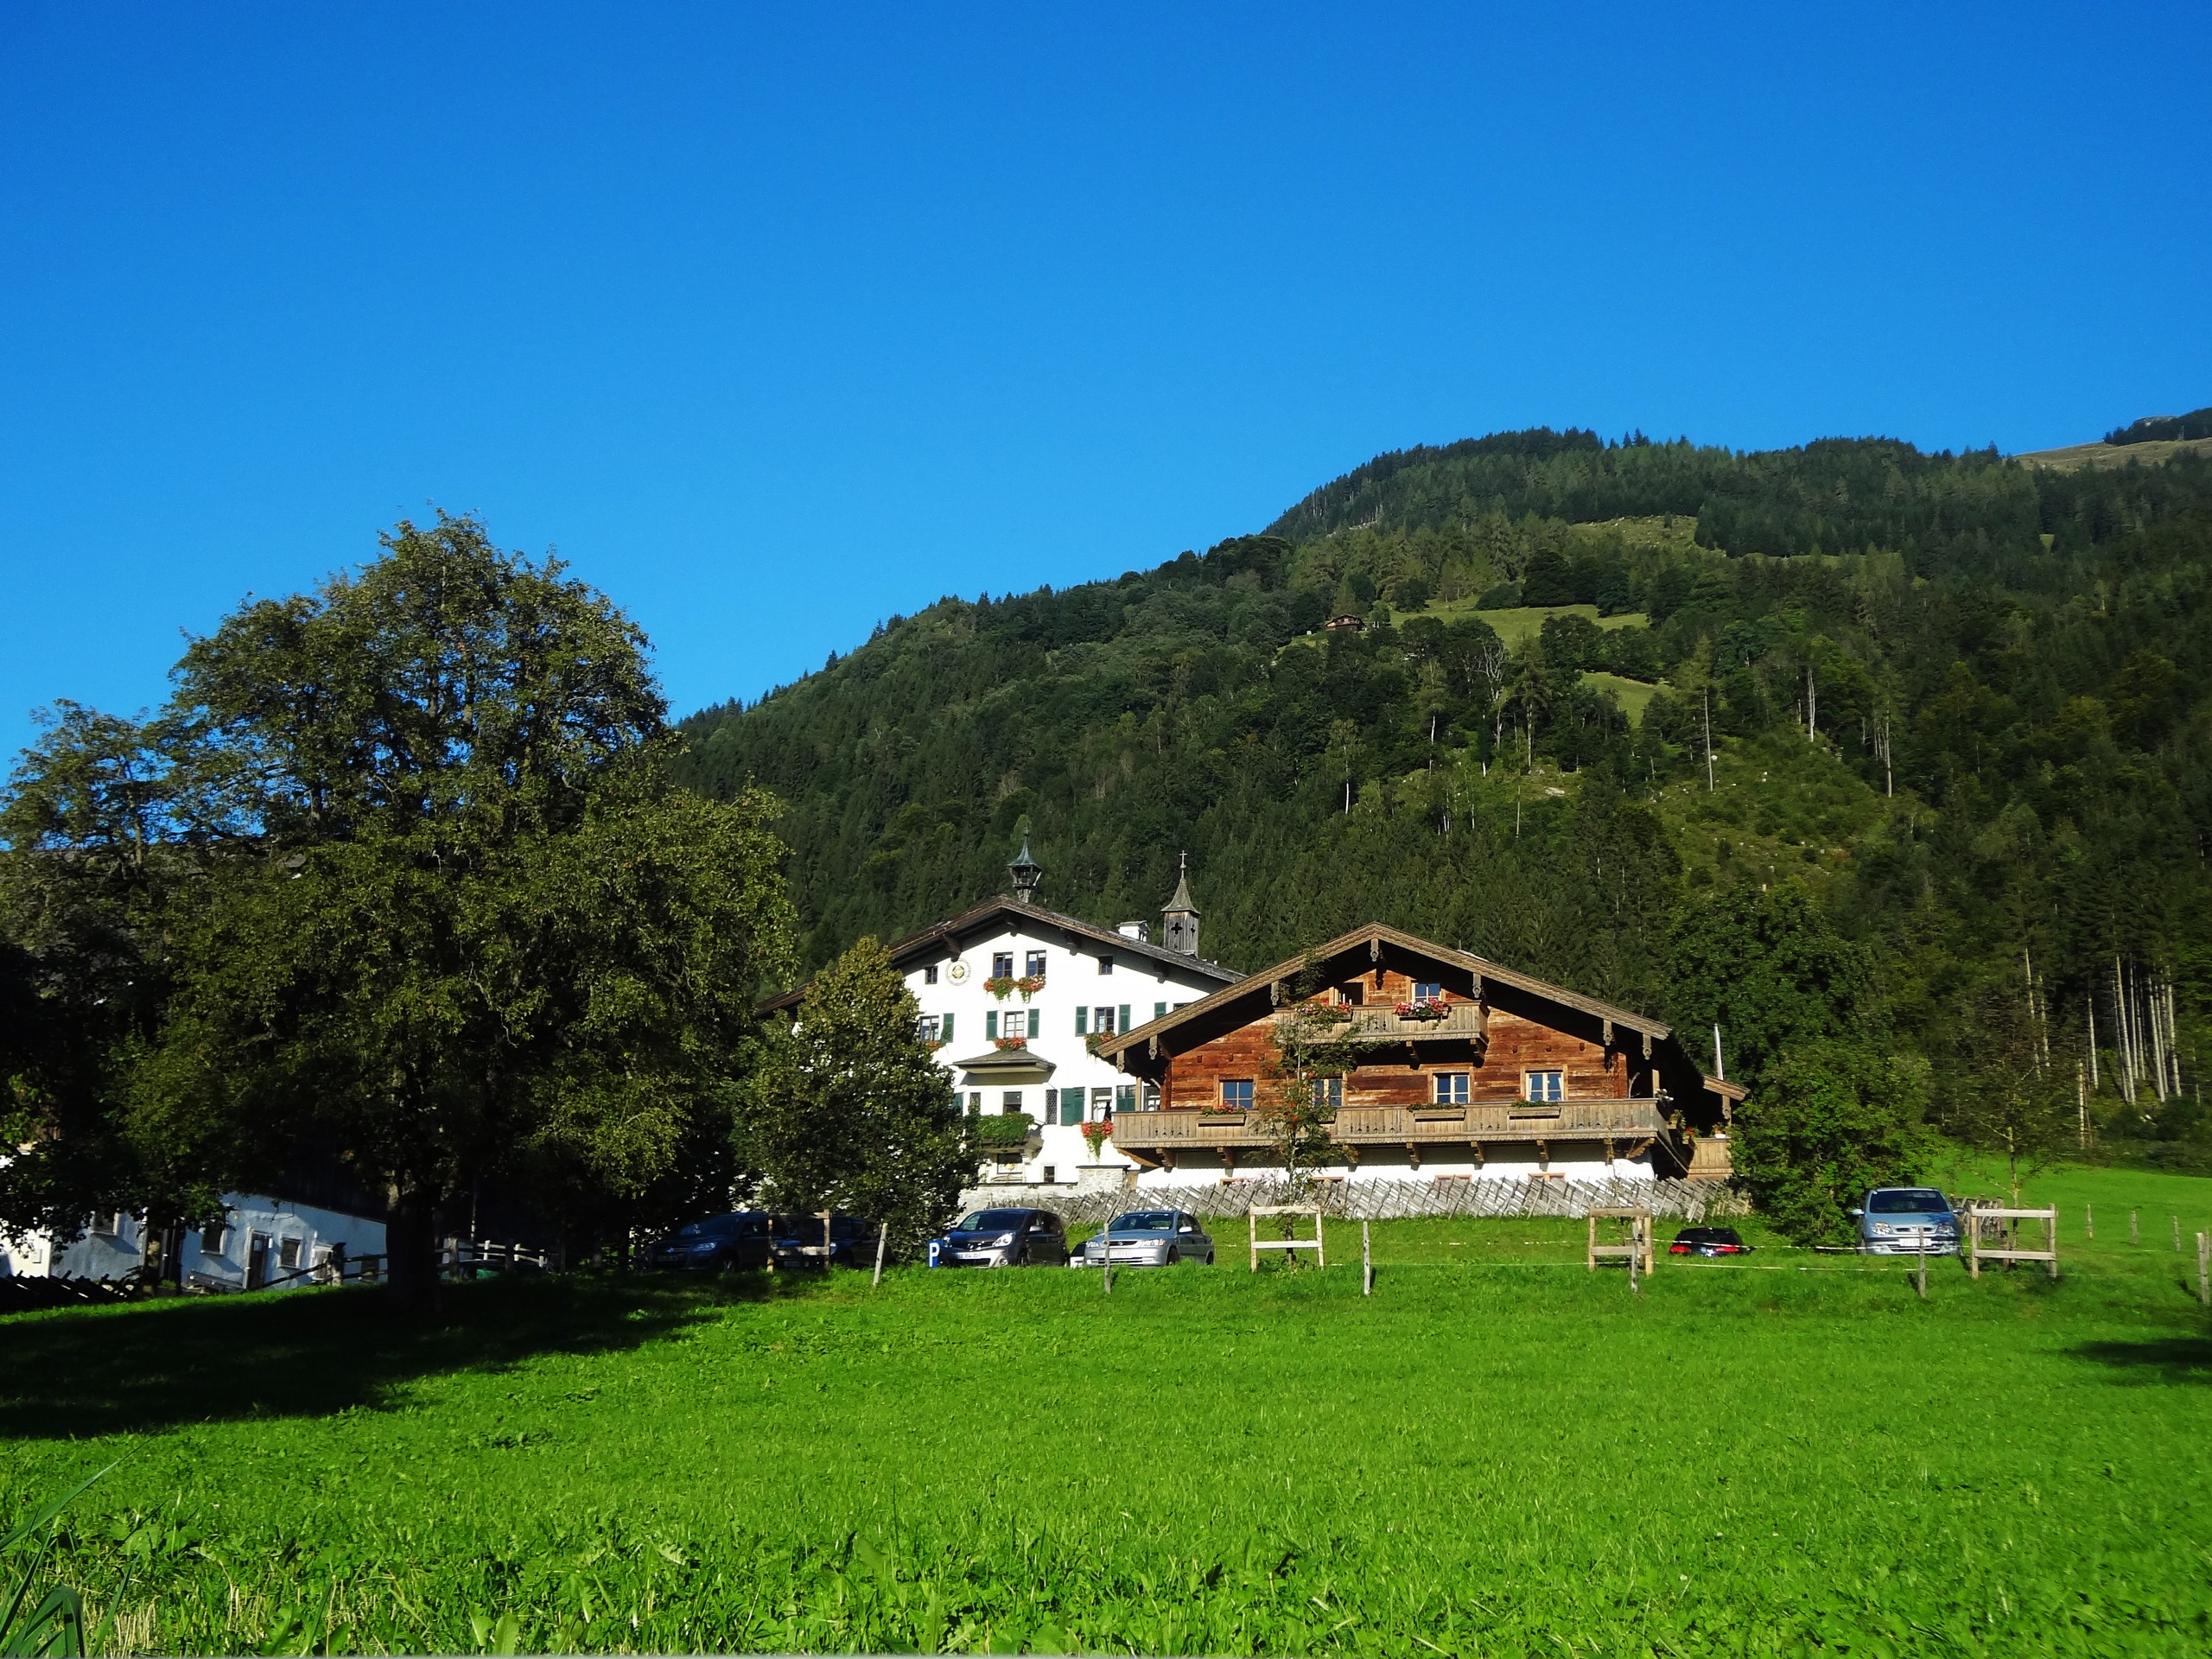 Pastures in Zell am See region in Austria